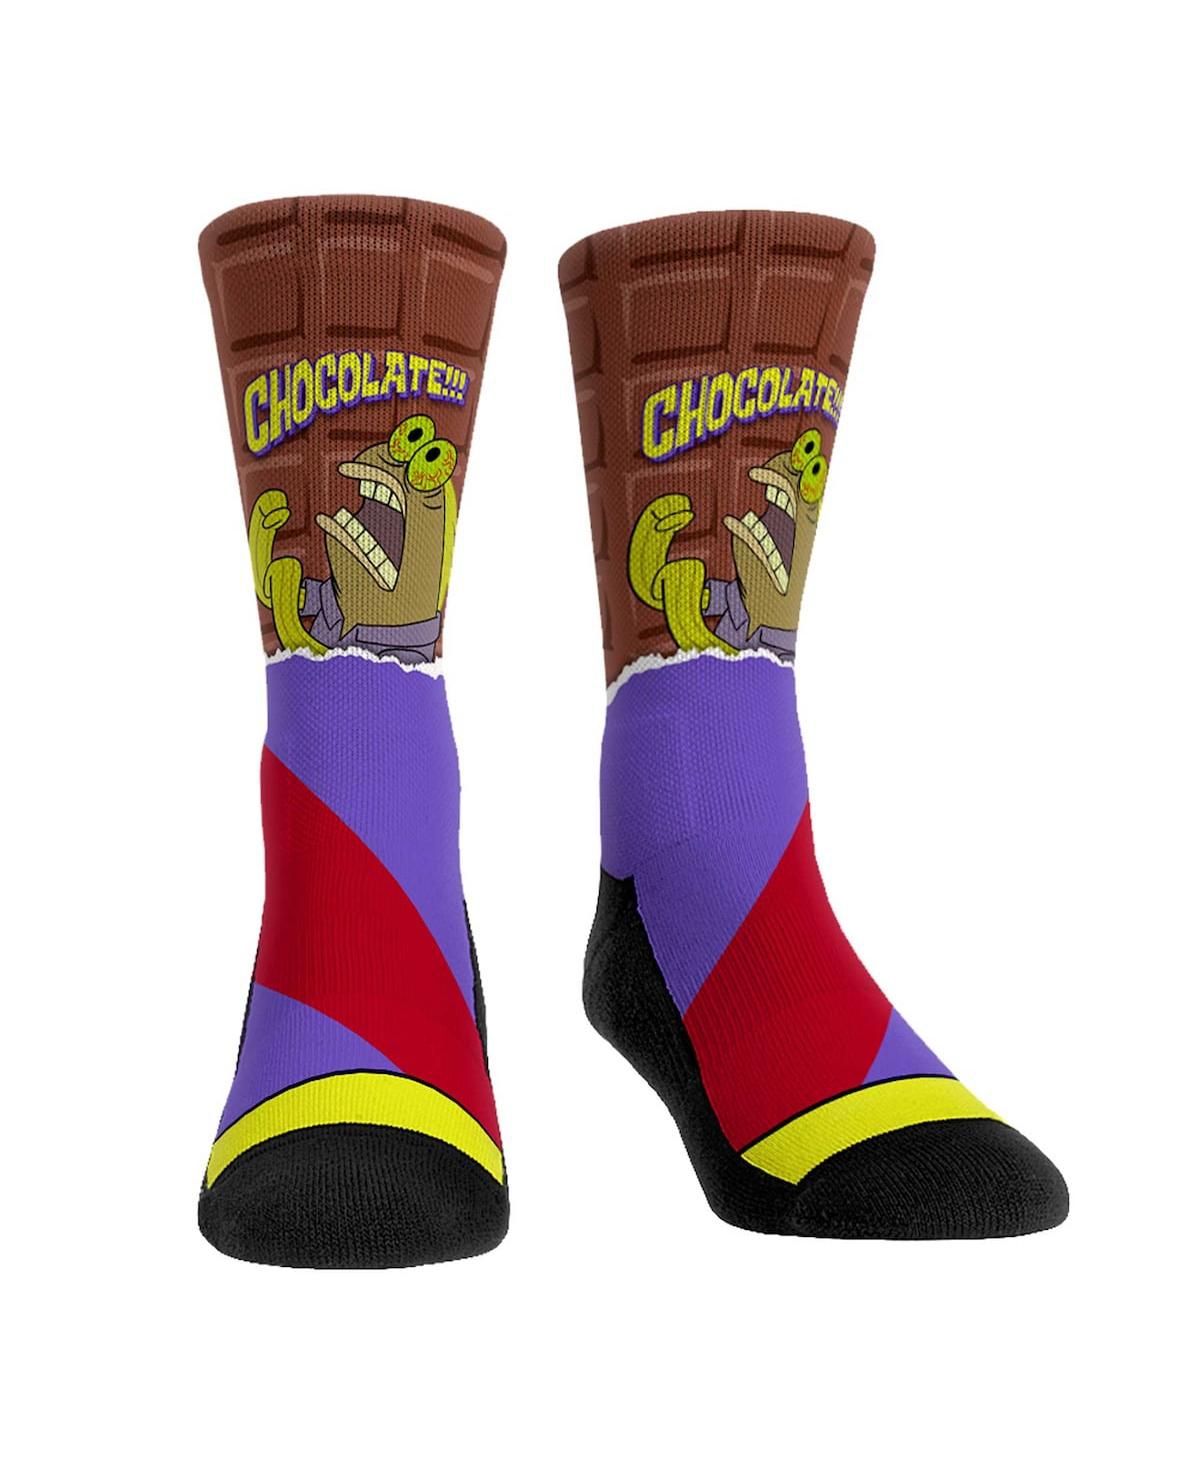 Shop Rock 'em Men's And Women's  Socks Spongebob Squarepants Chocolate Crew Socks In Multi